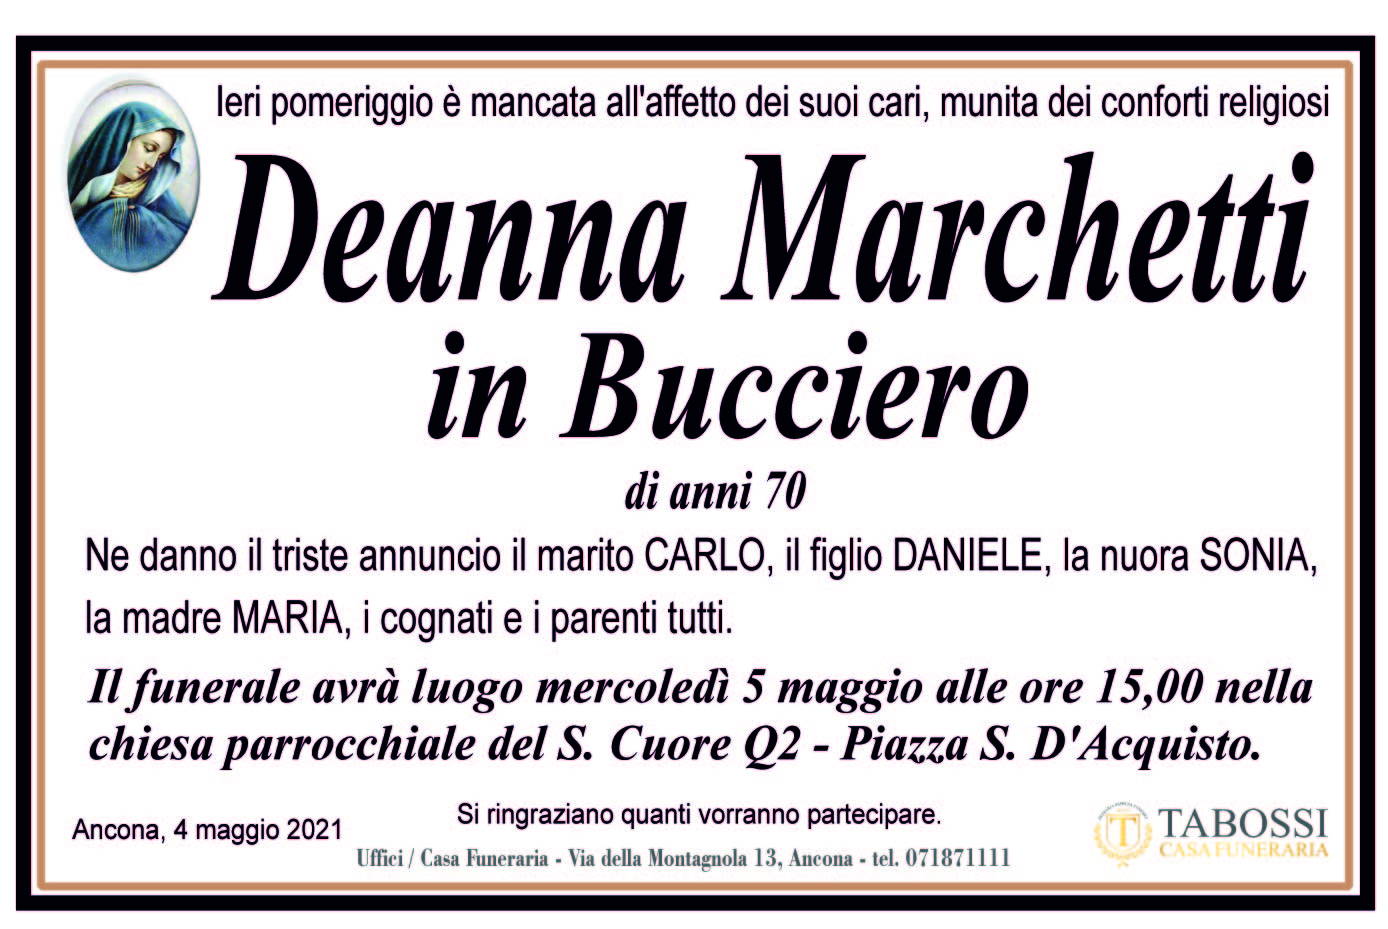 Deanna Marchetti